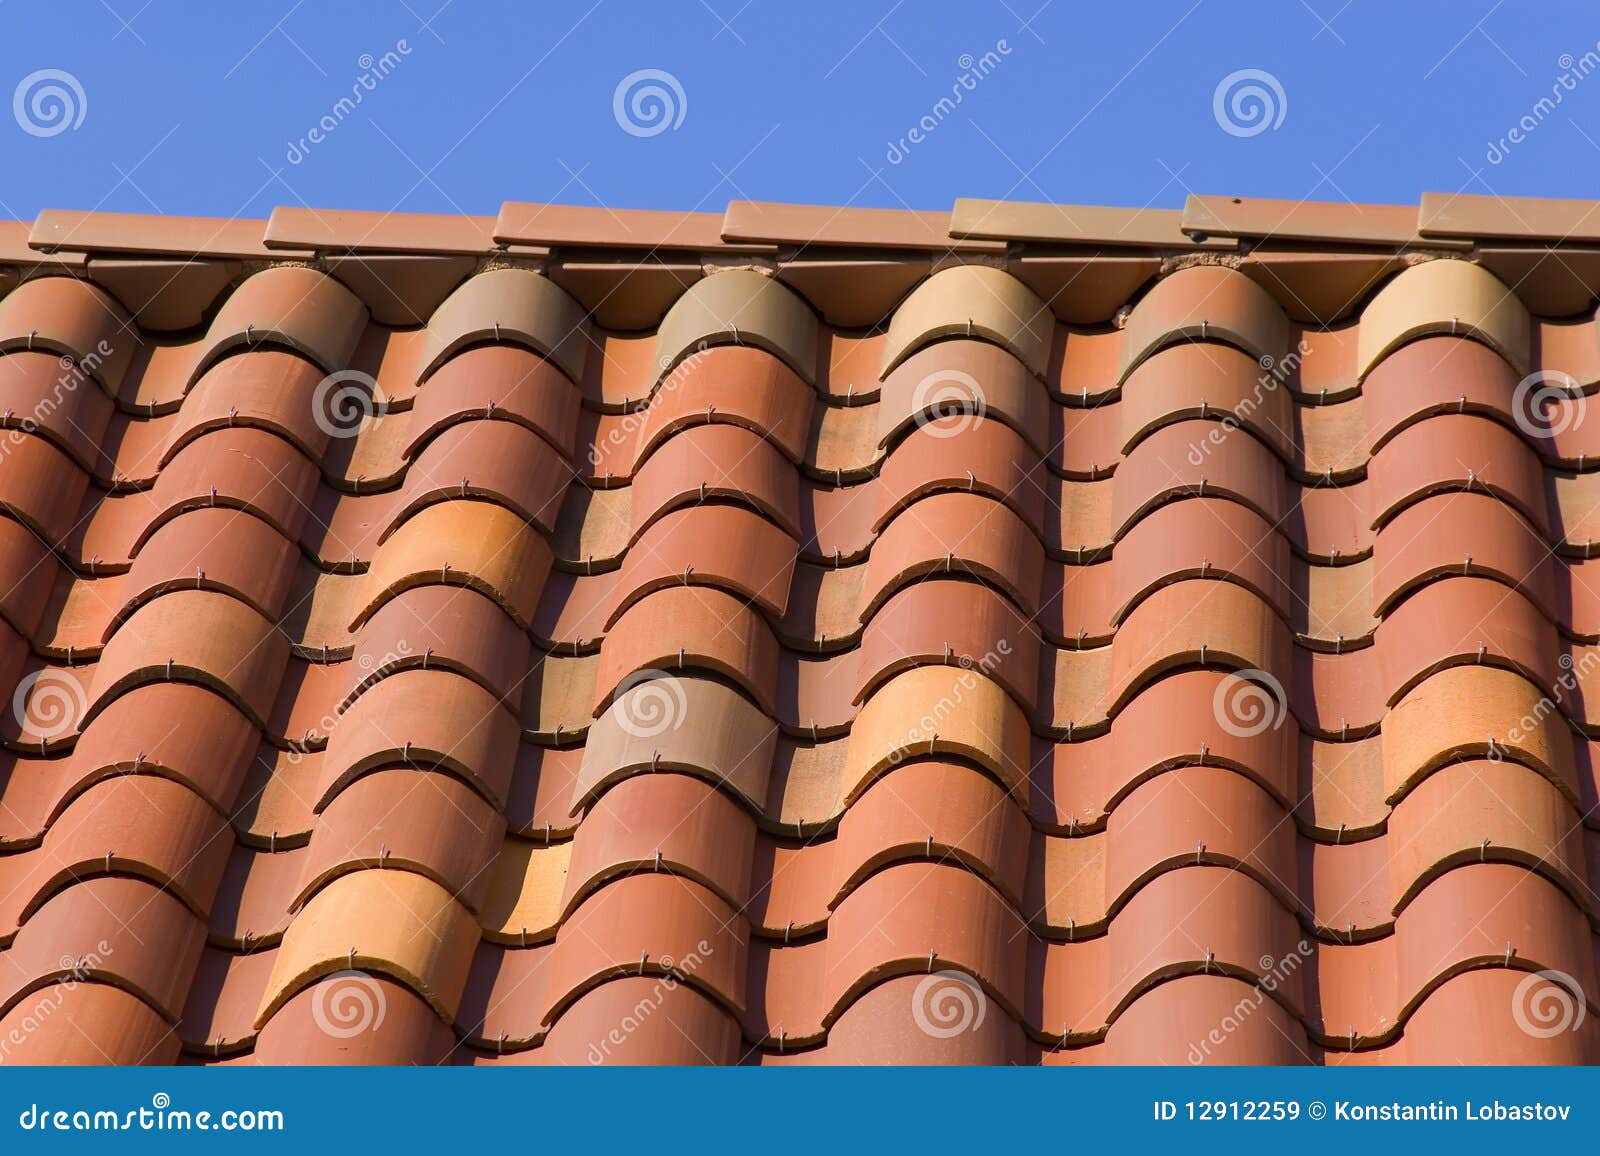 Orange tile roof closeup stock image. Image of shelter - 12912259